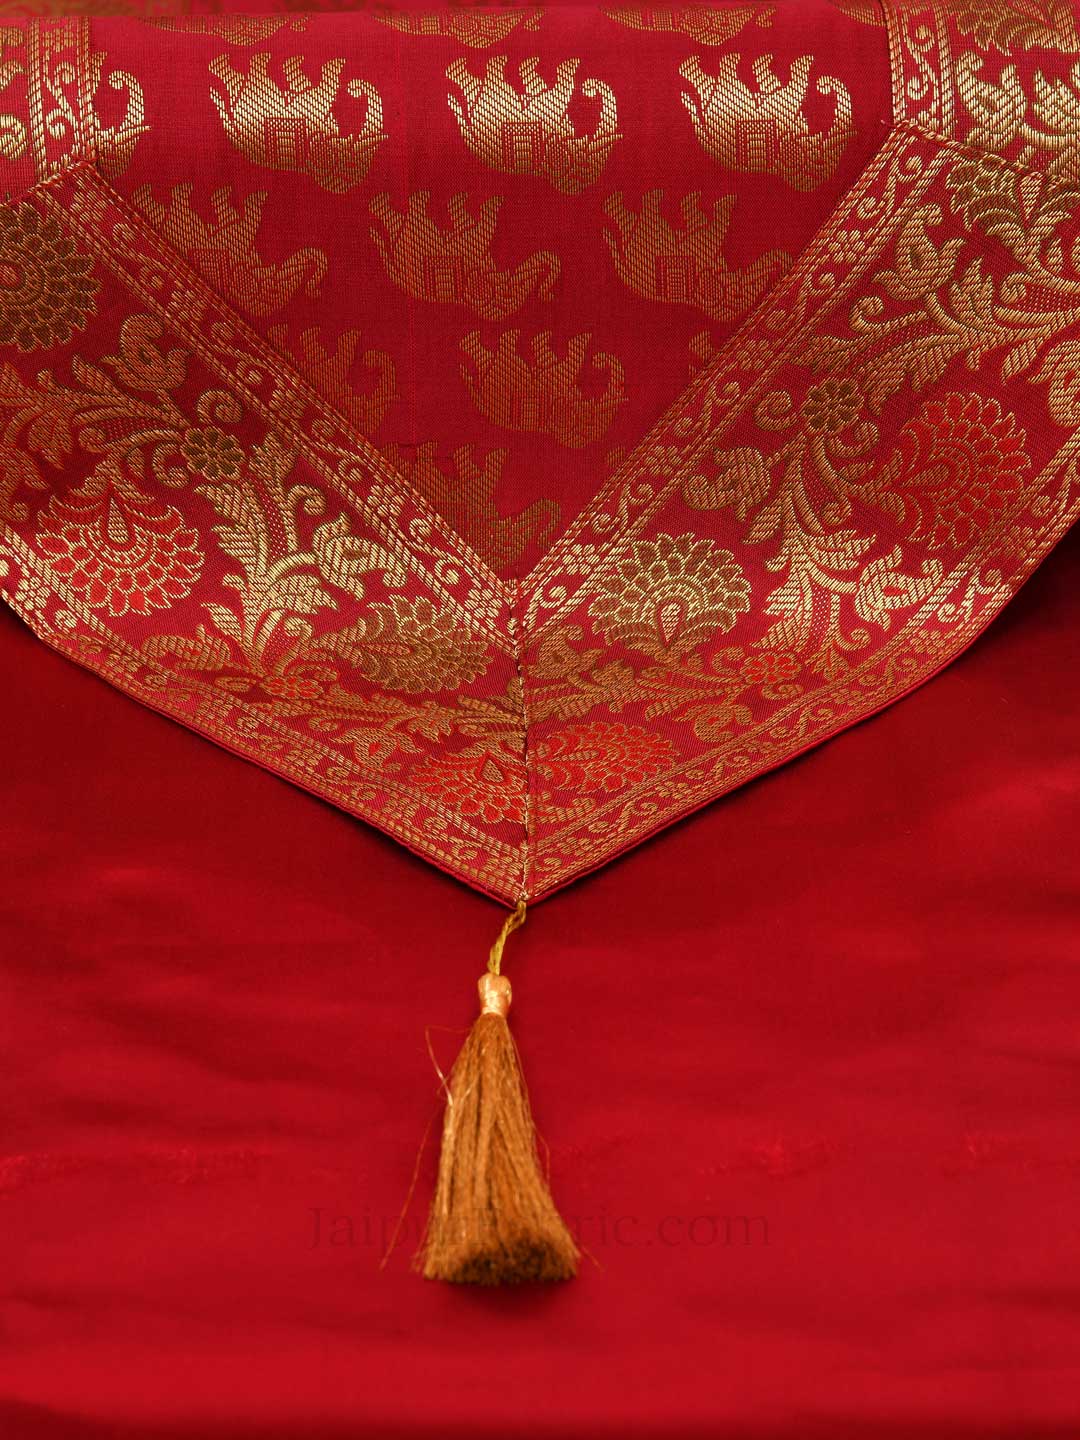 Traditional Elephant Print Orange Silk Table Runner